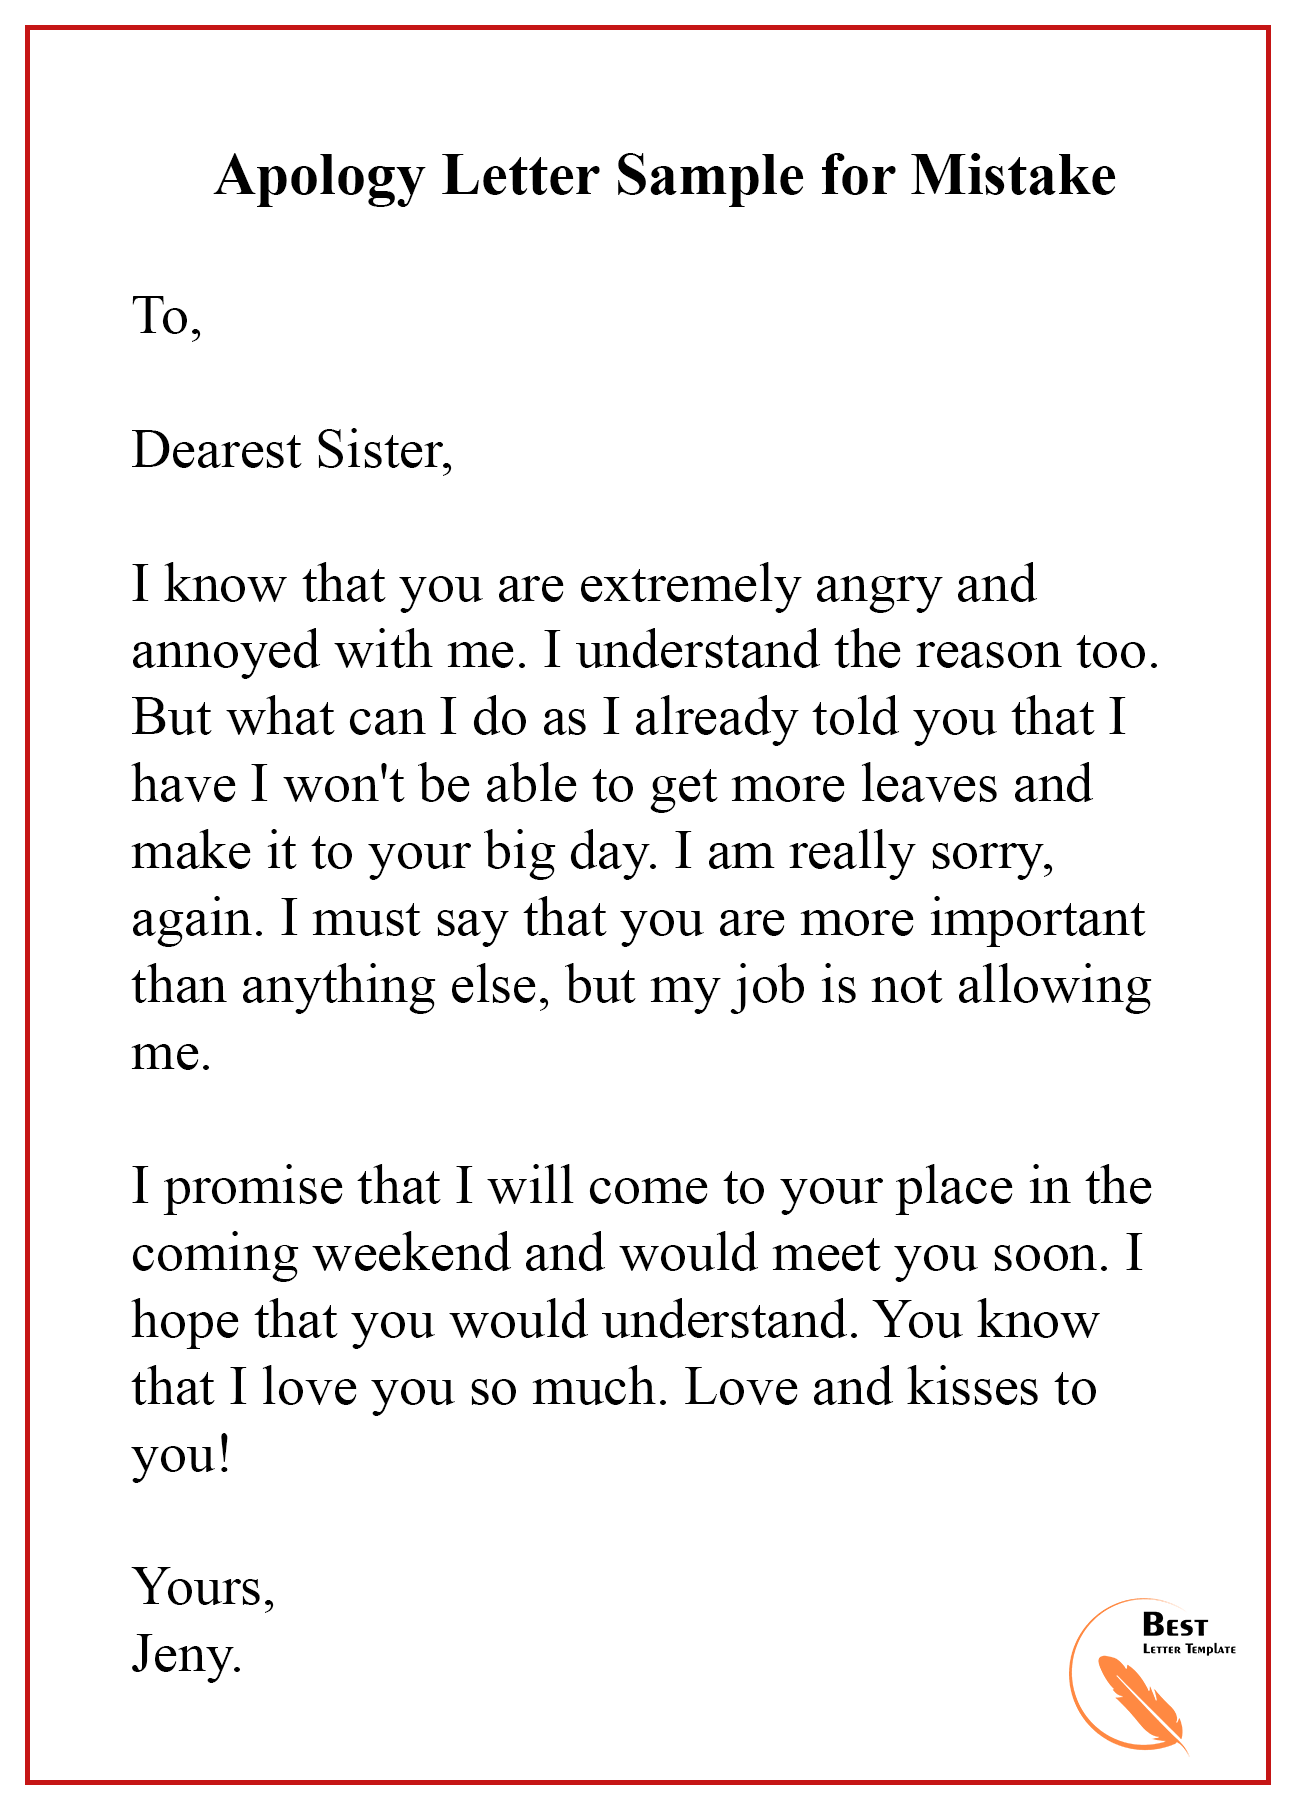 Apology Letter Sample for Mistake Best Letter Template